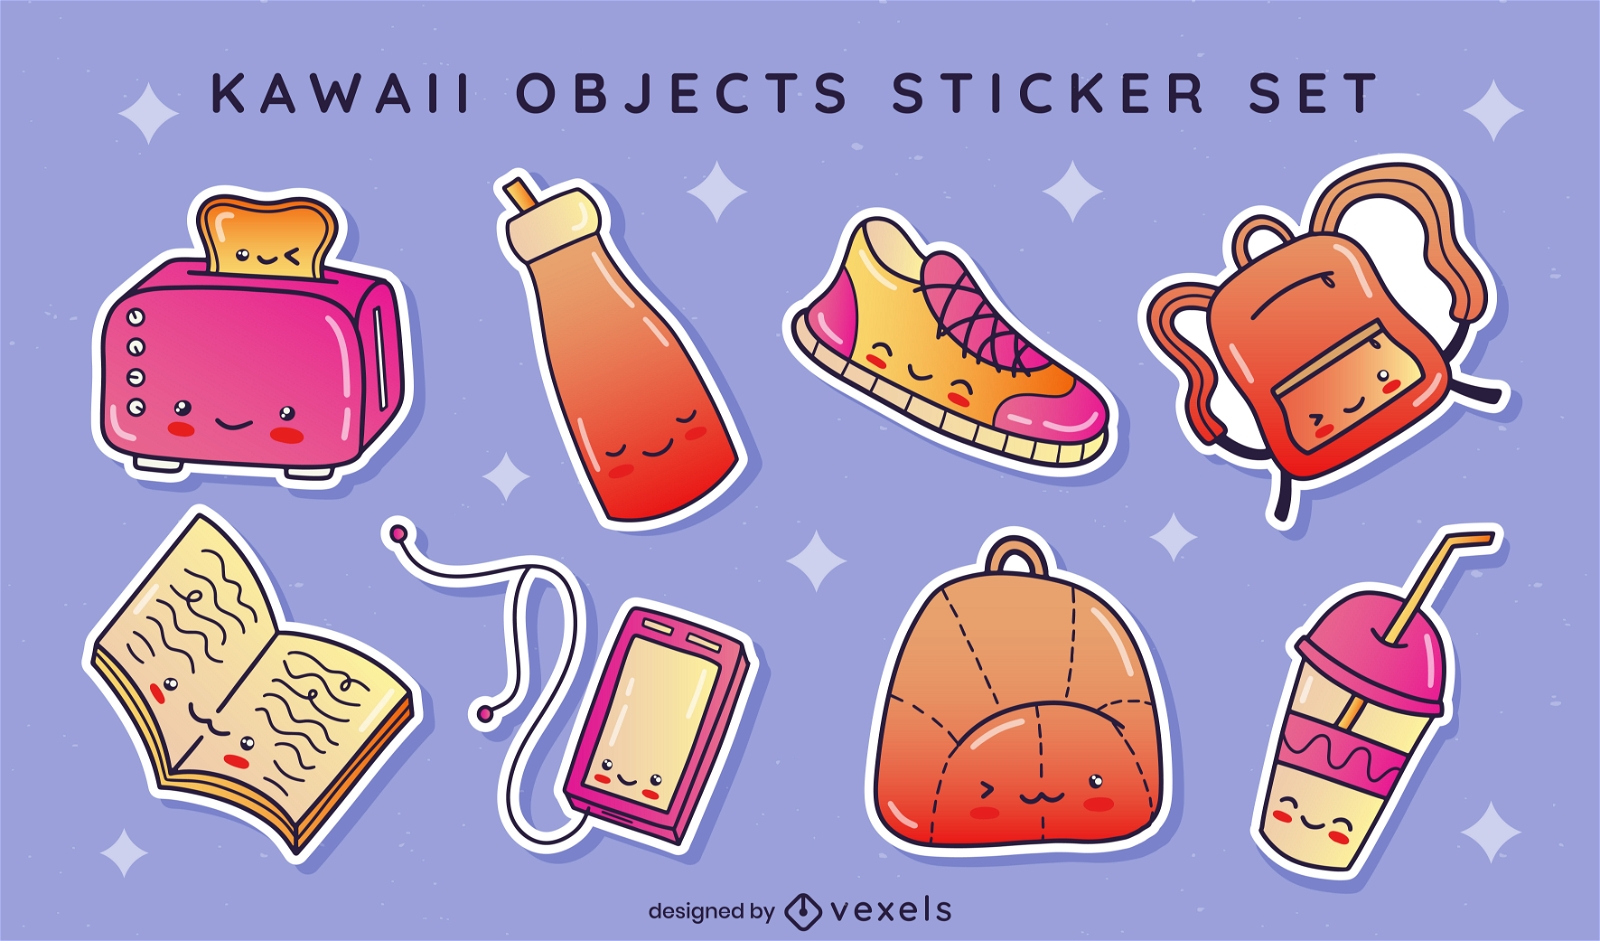 Kawaii objects sticker set